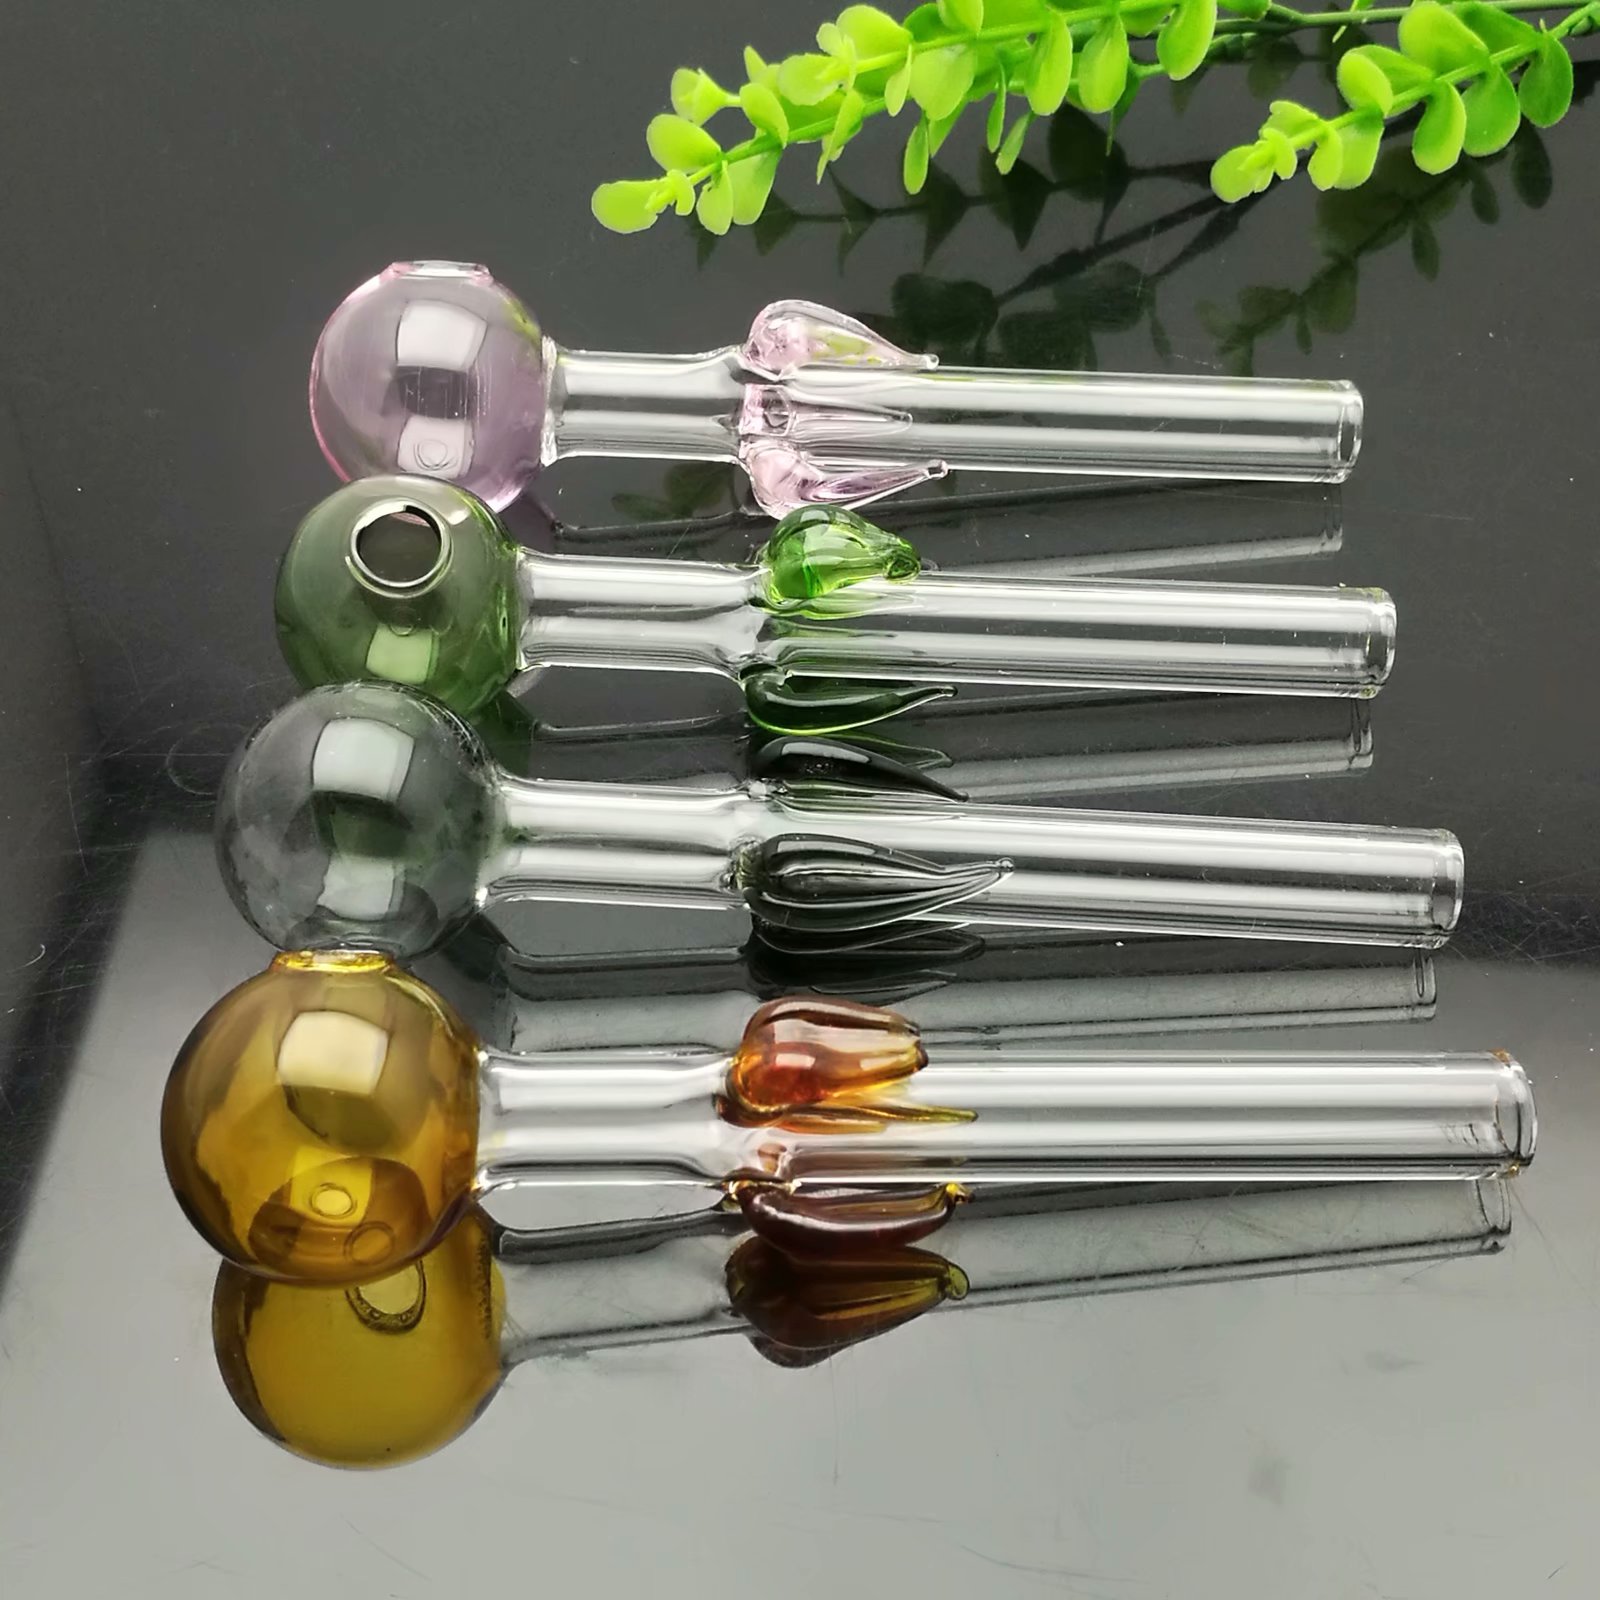 Tubi di vetro Fabbricazione di fumatori Narghilè soffiato a mano Foglie colorate di vendita calda, vetro e pentola calda a bolle